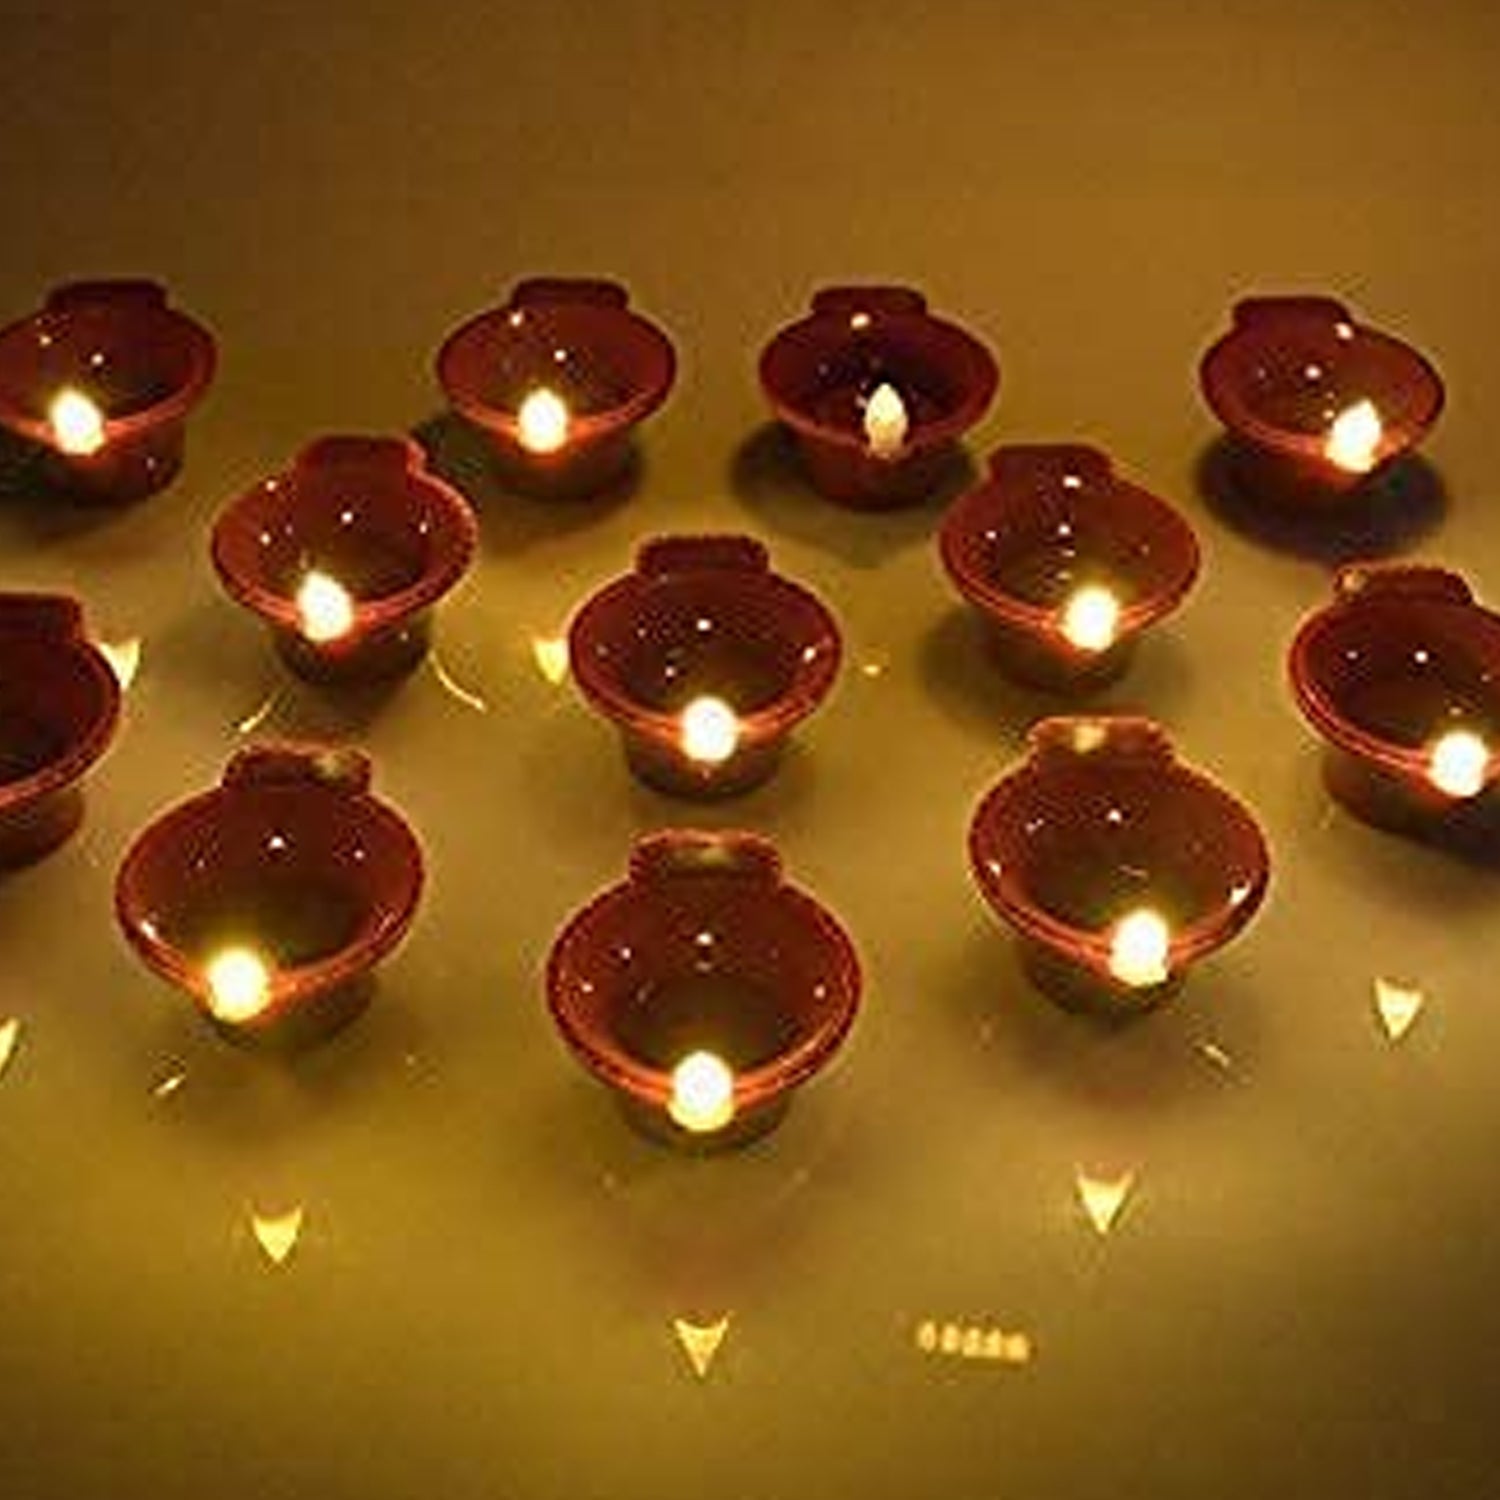 6550 Water Sensor Diyas for Diwali Decoration | Diyas for Home Decoration| Diwali Decoration Items for Home Decor Diyas | Diwali LED Diyas Candle with Water Sensing Technology E-Diya (6Pc Set)